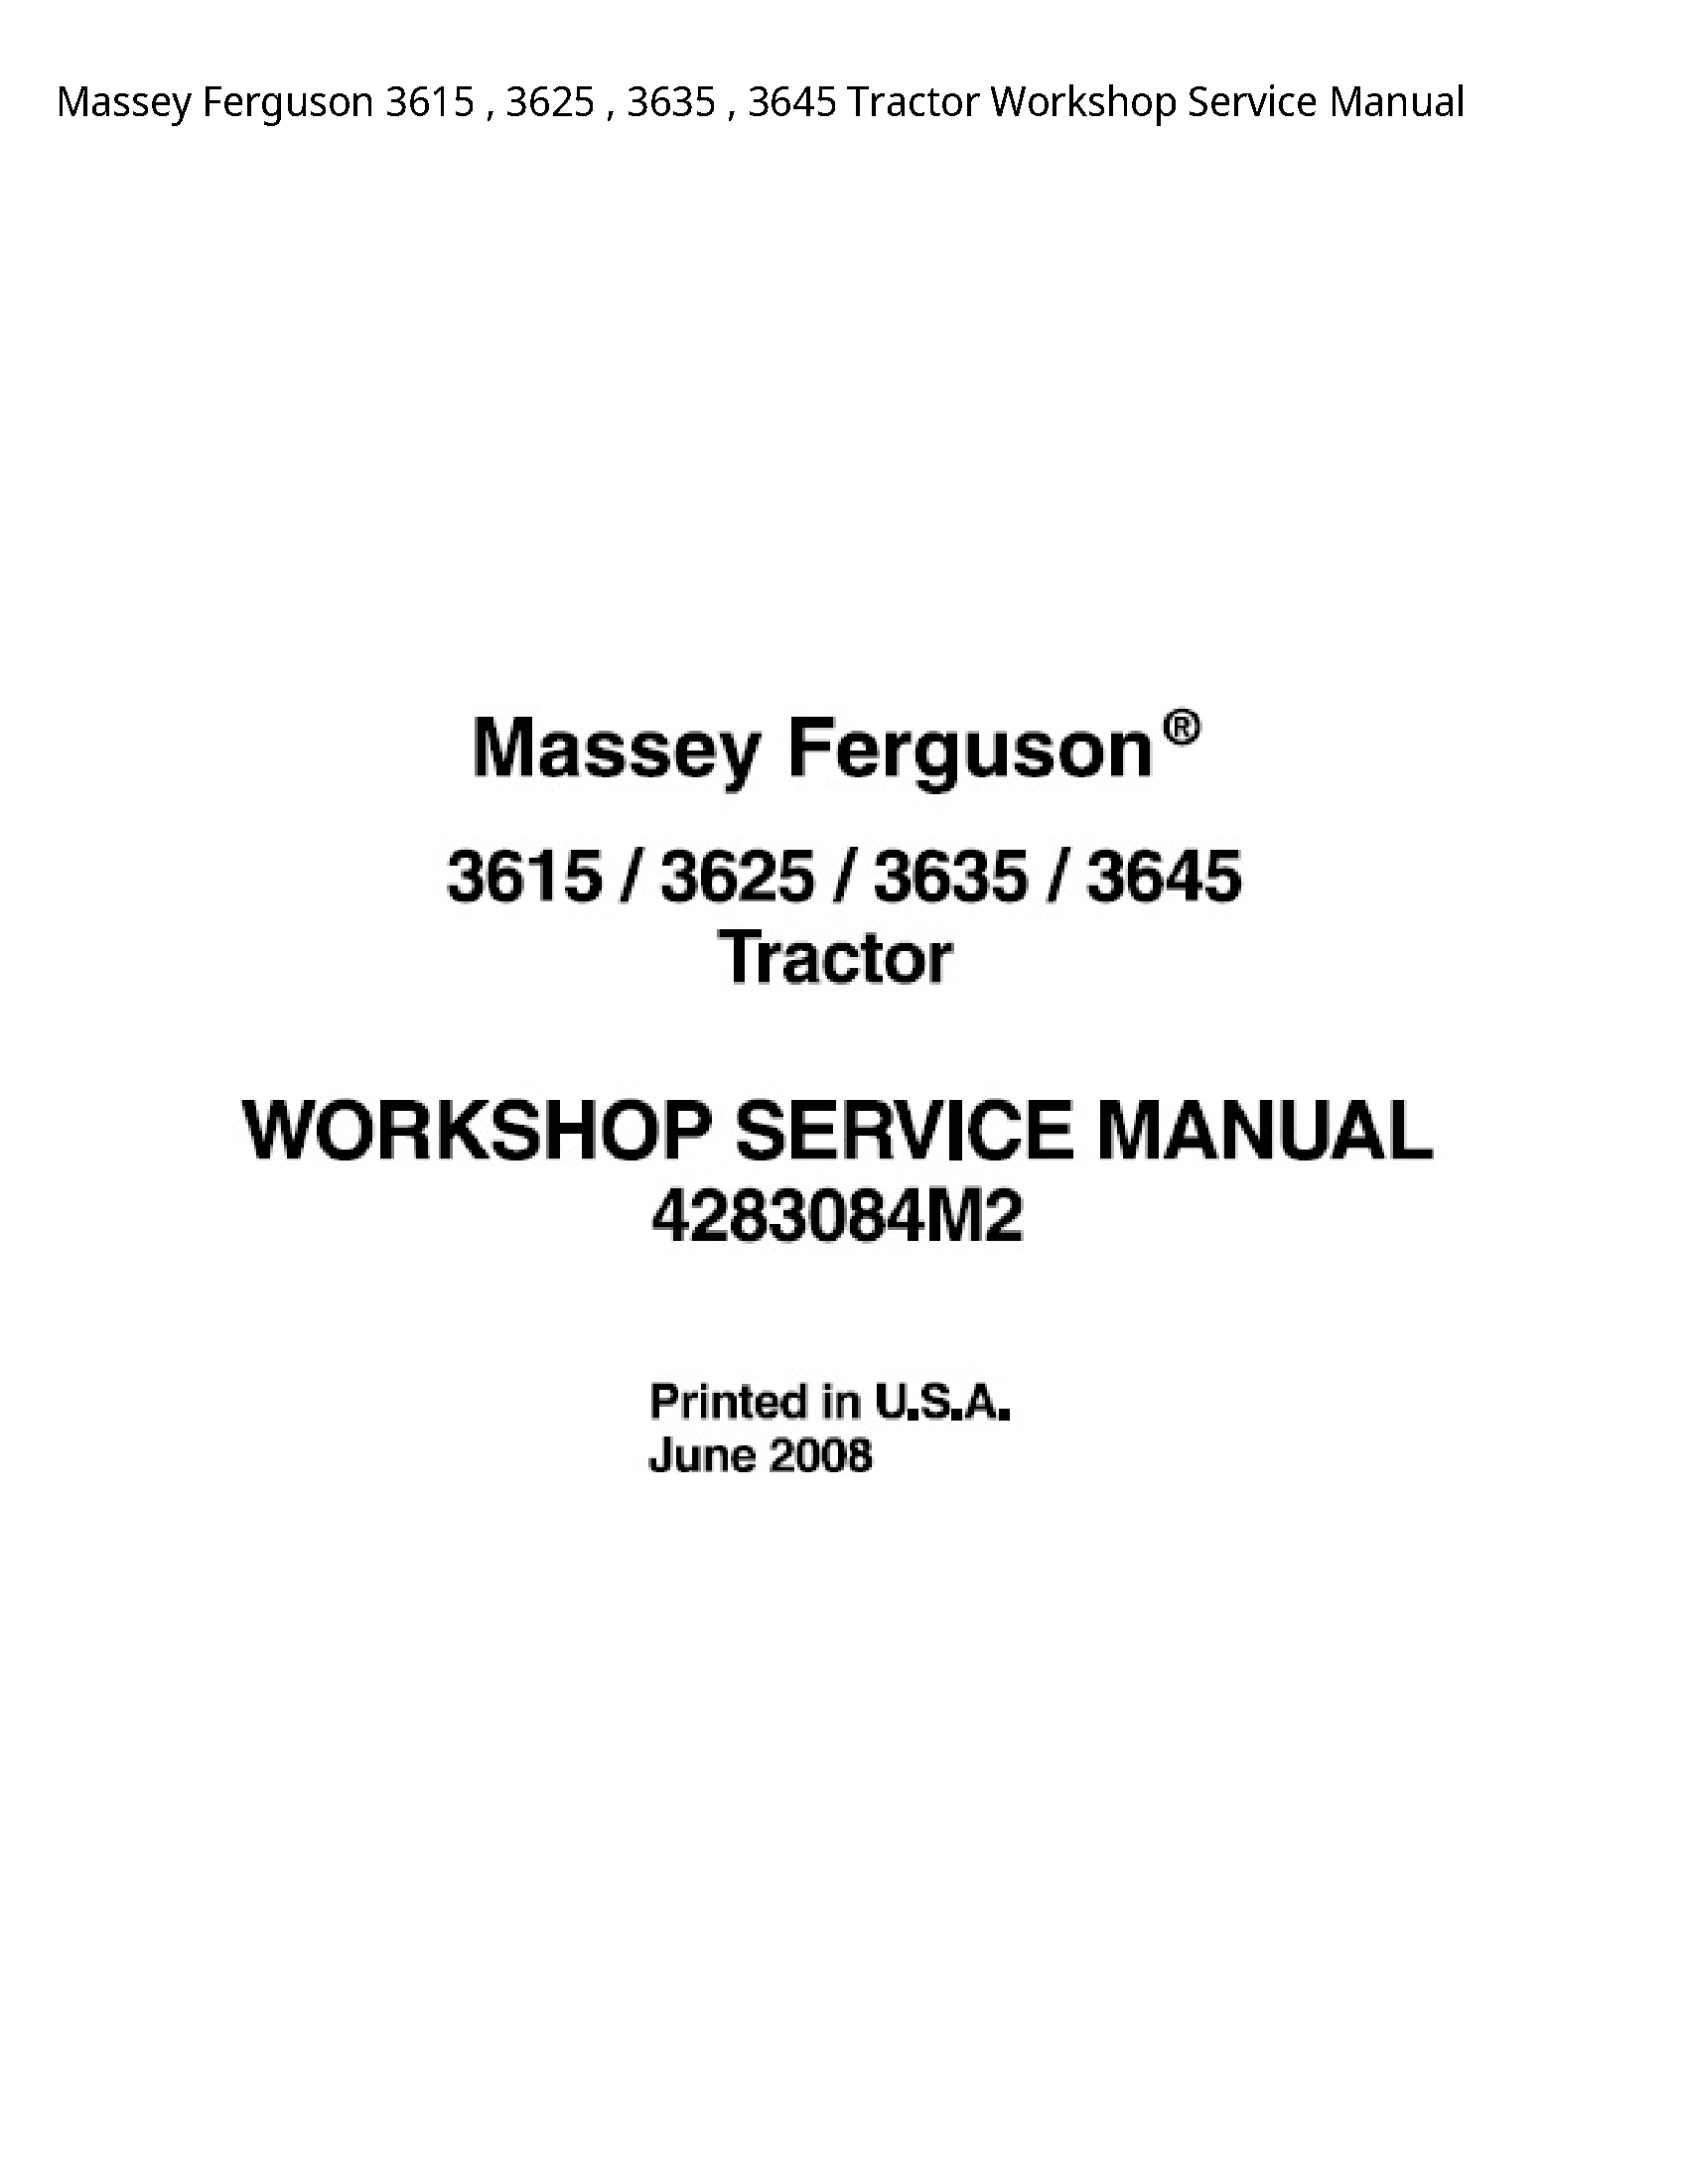 Massey Ferguson 3615 Tractor Service manual